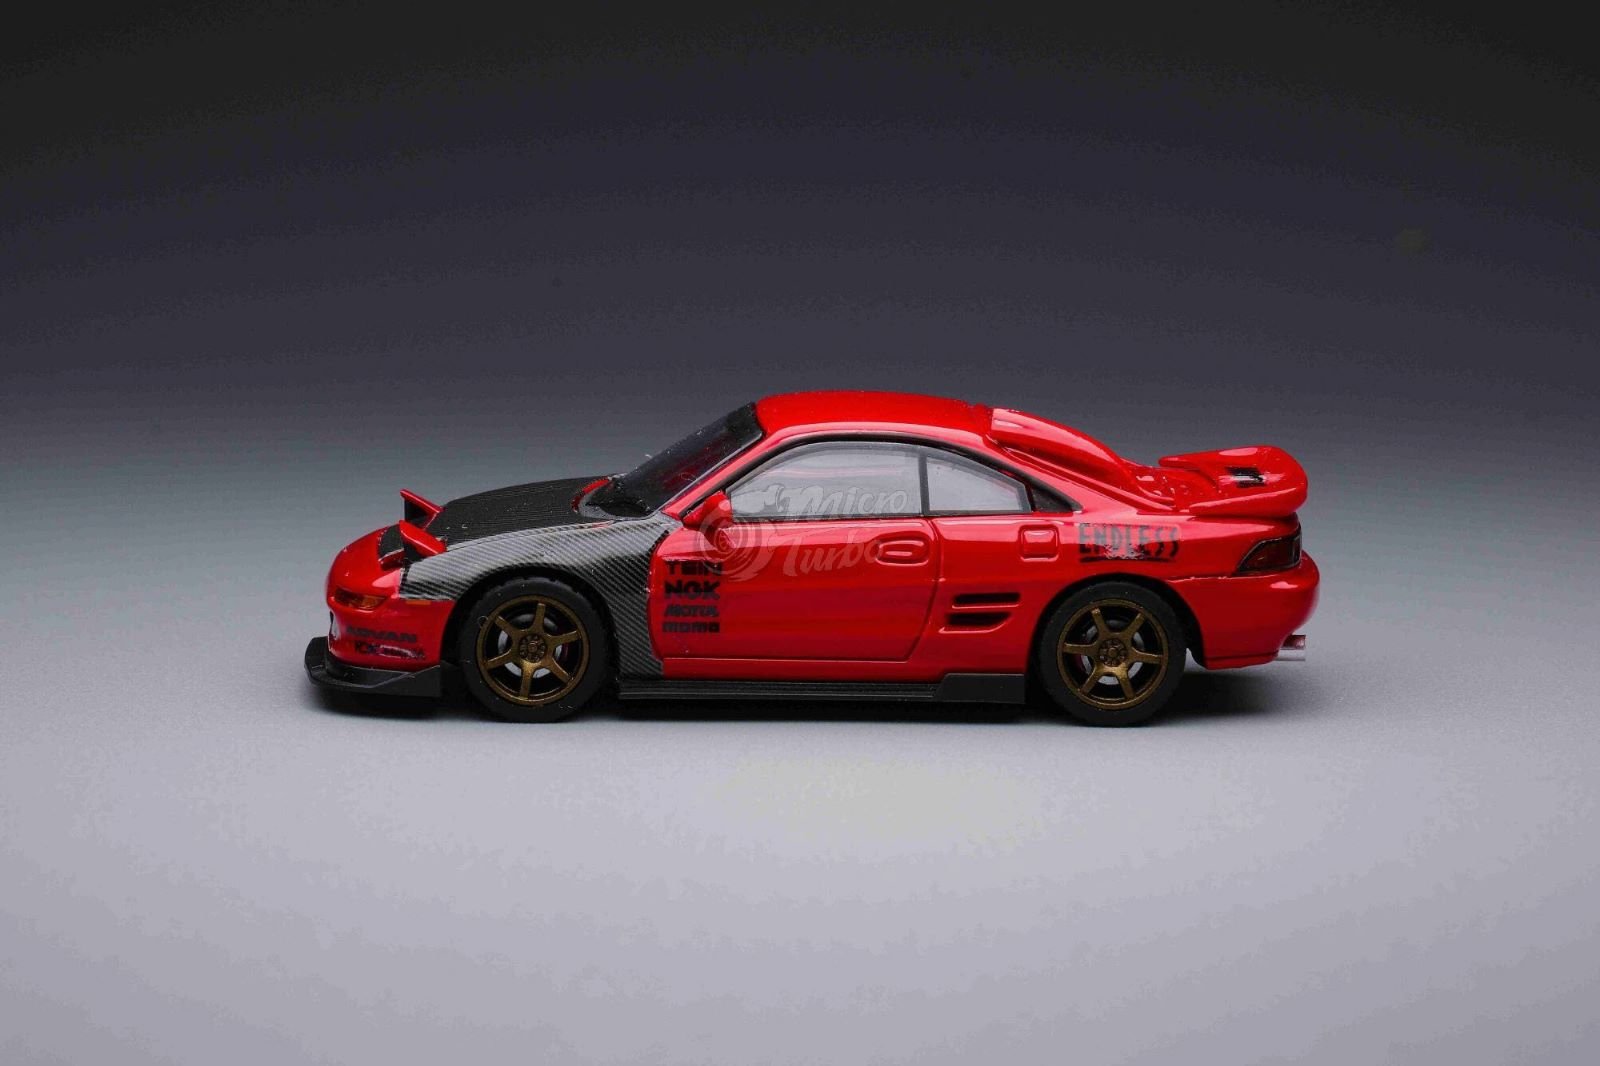 Auto a escala marca Micro Turbo, MR2 SW20, Edición Limitada de la "Global Miniature Show 2023" - Chido Toys